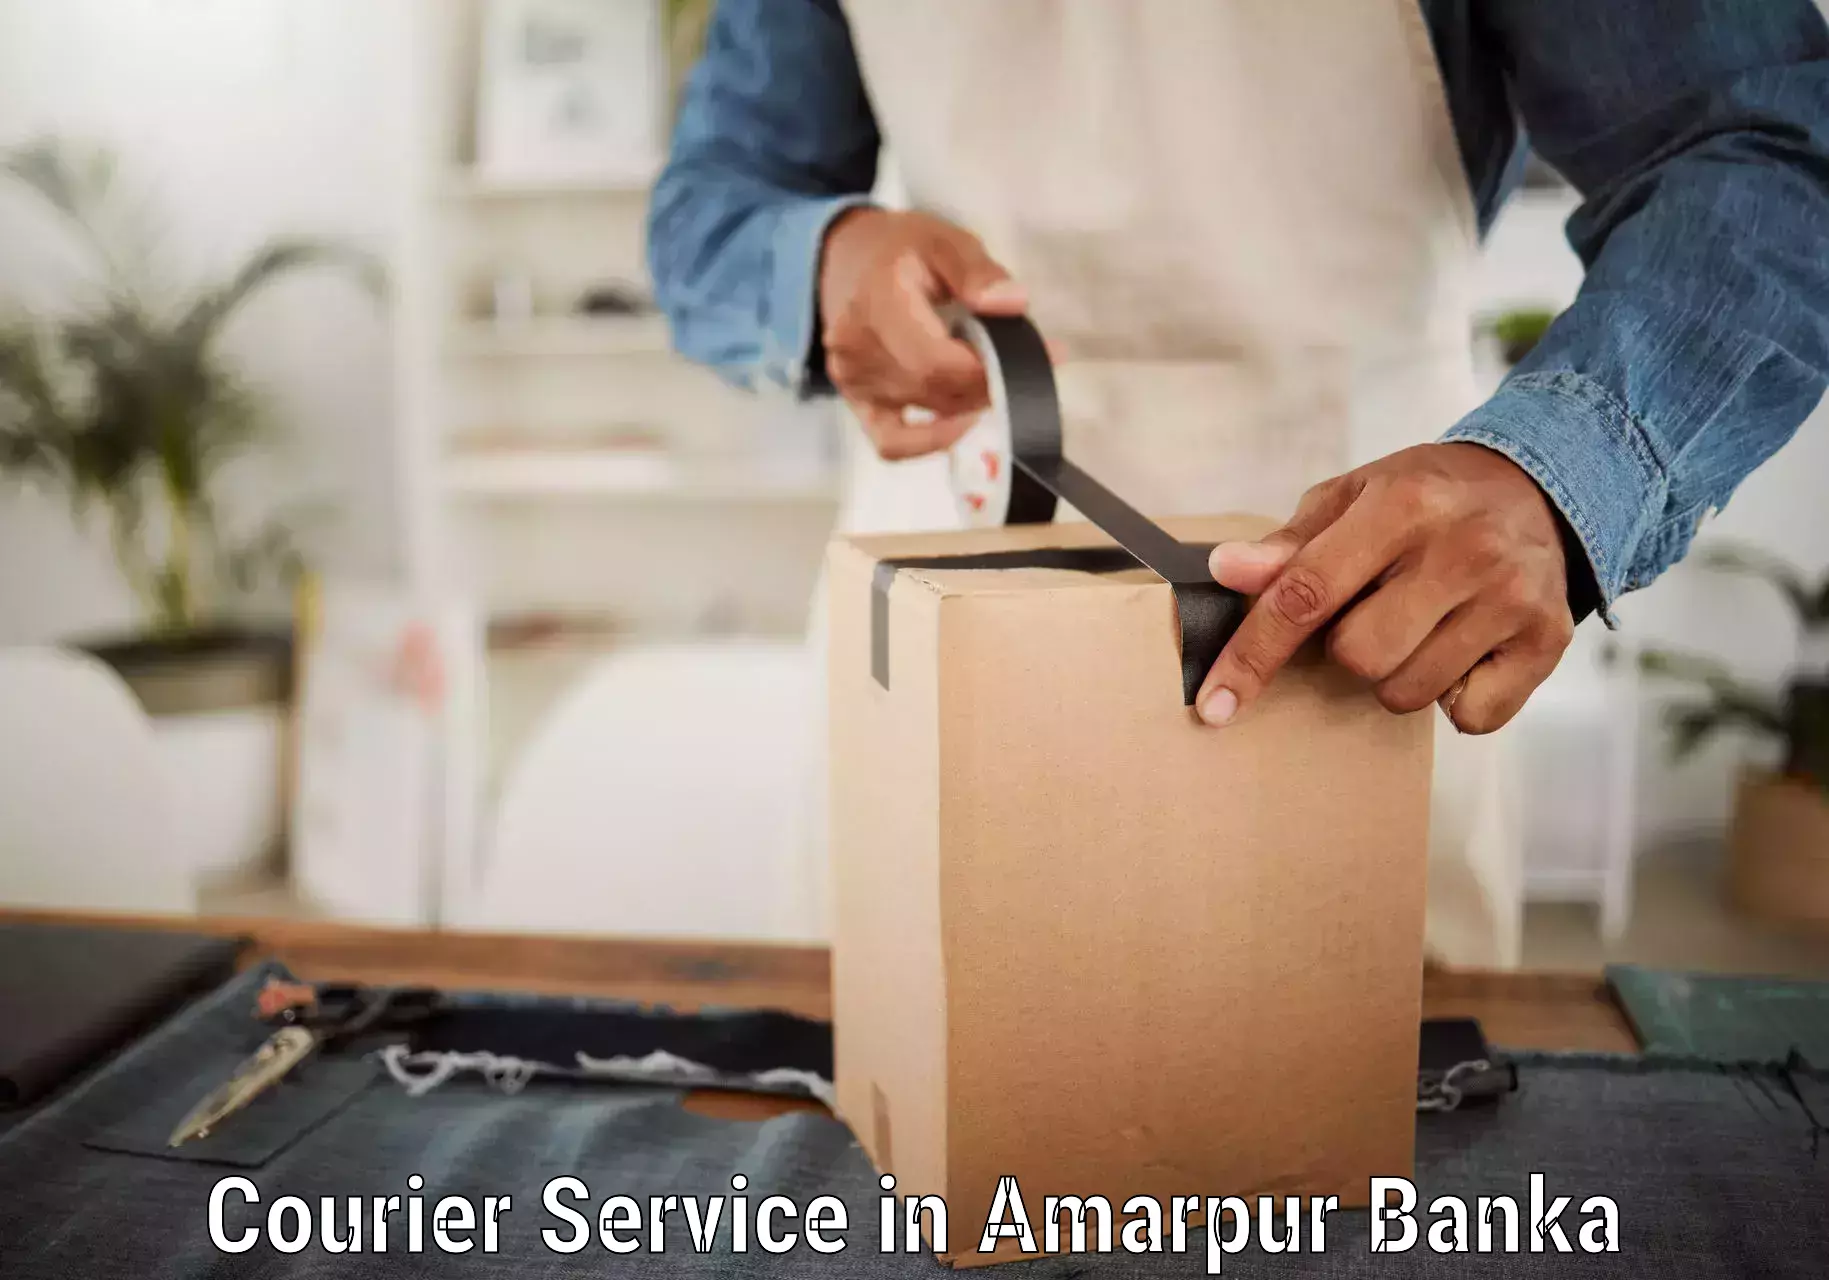 Customizable shipping options in Amarpur Banka